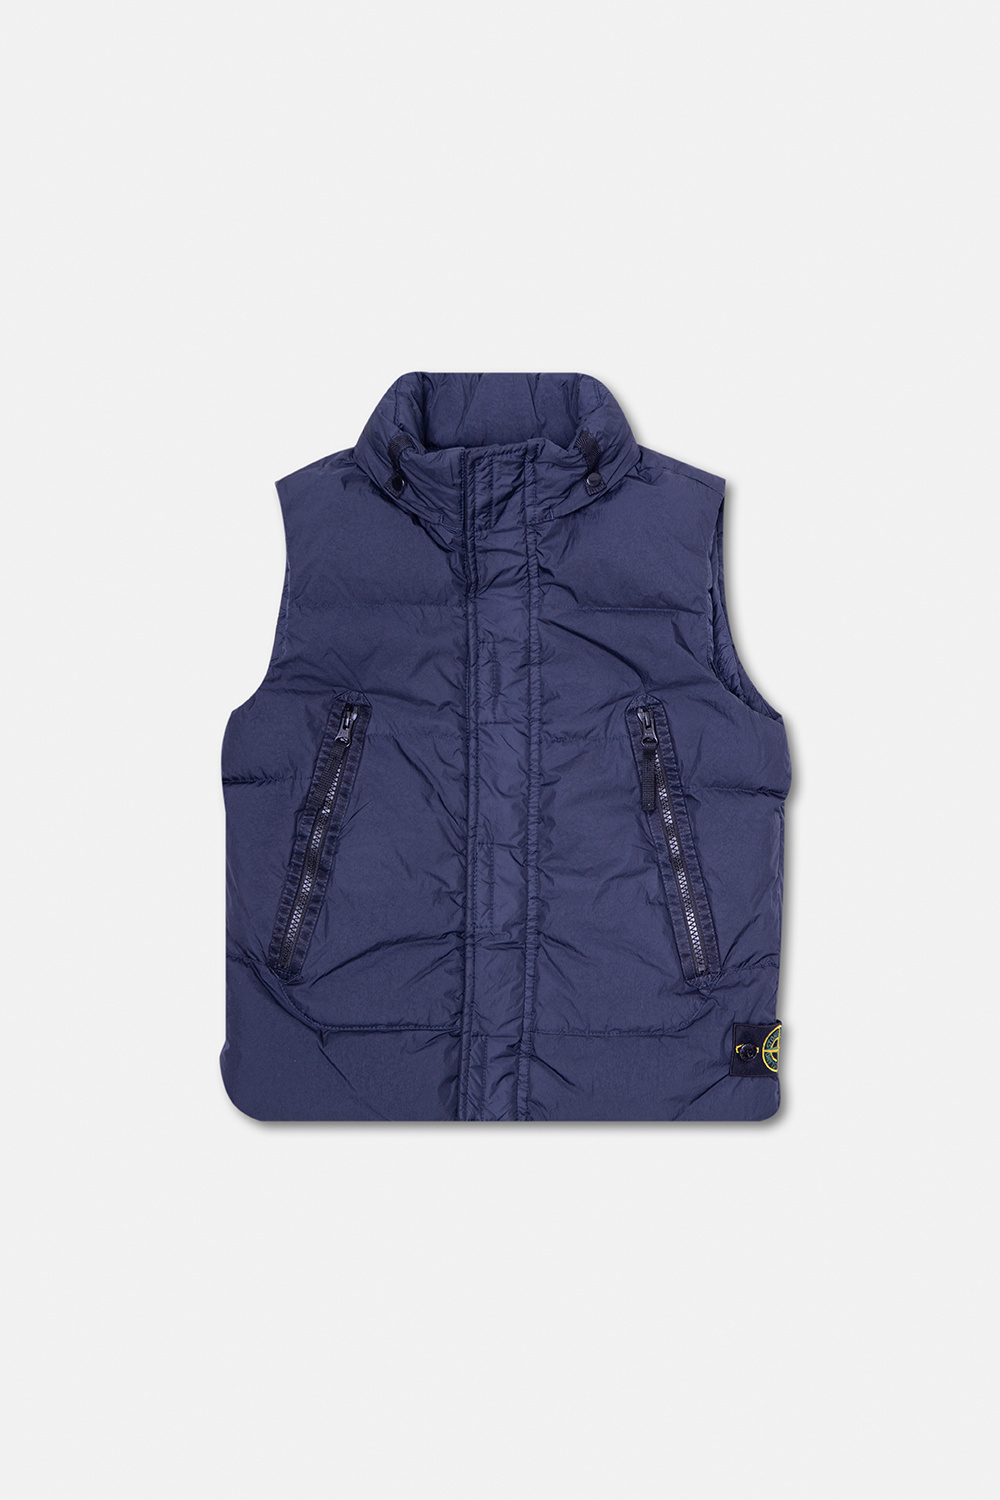 polo ralph lauren blue denim jacket Quilted down vest